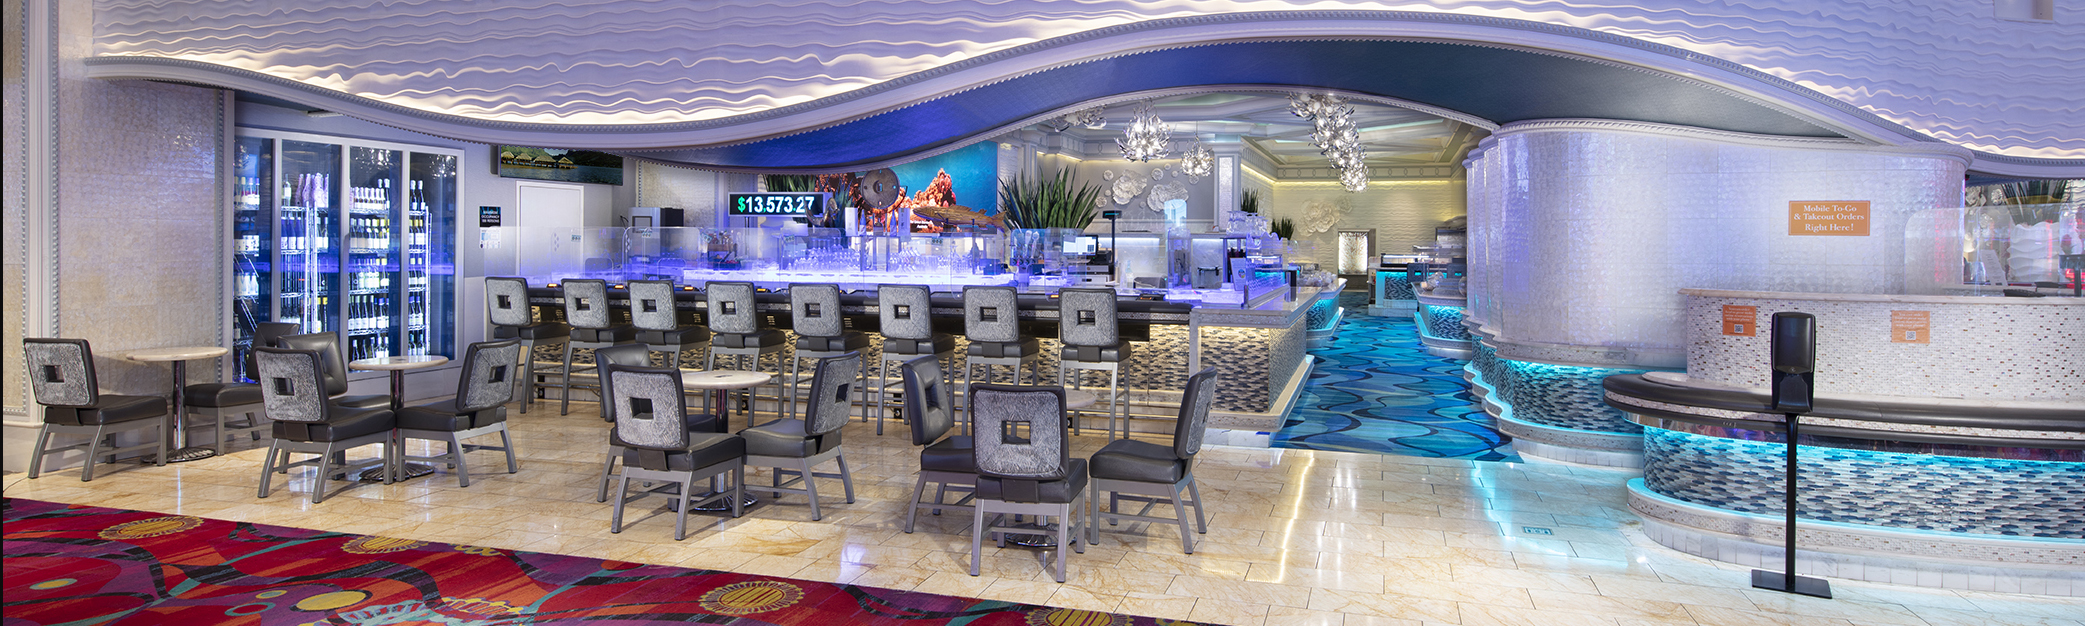 Oceano Bar | Peppermill Reno Lounges